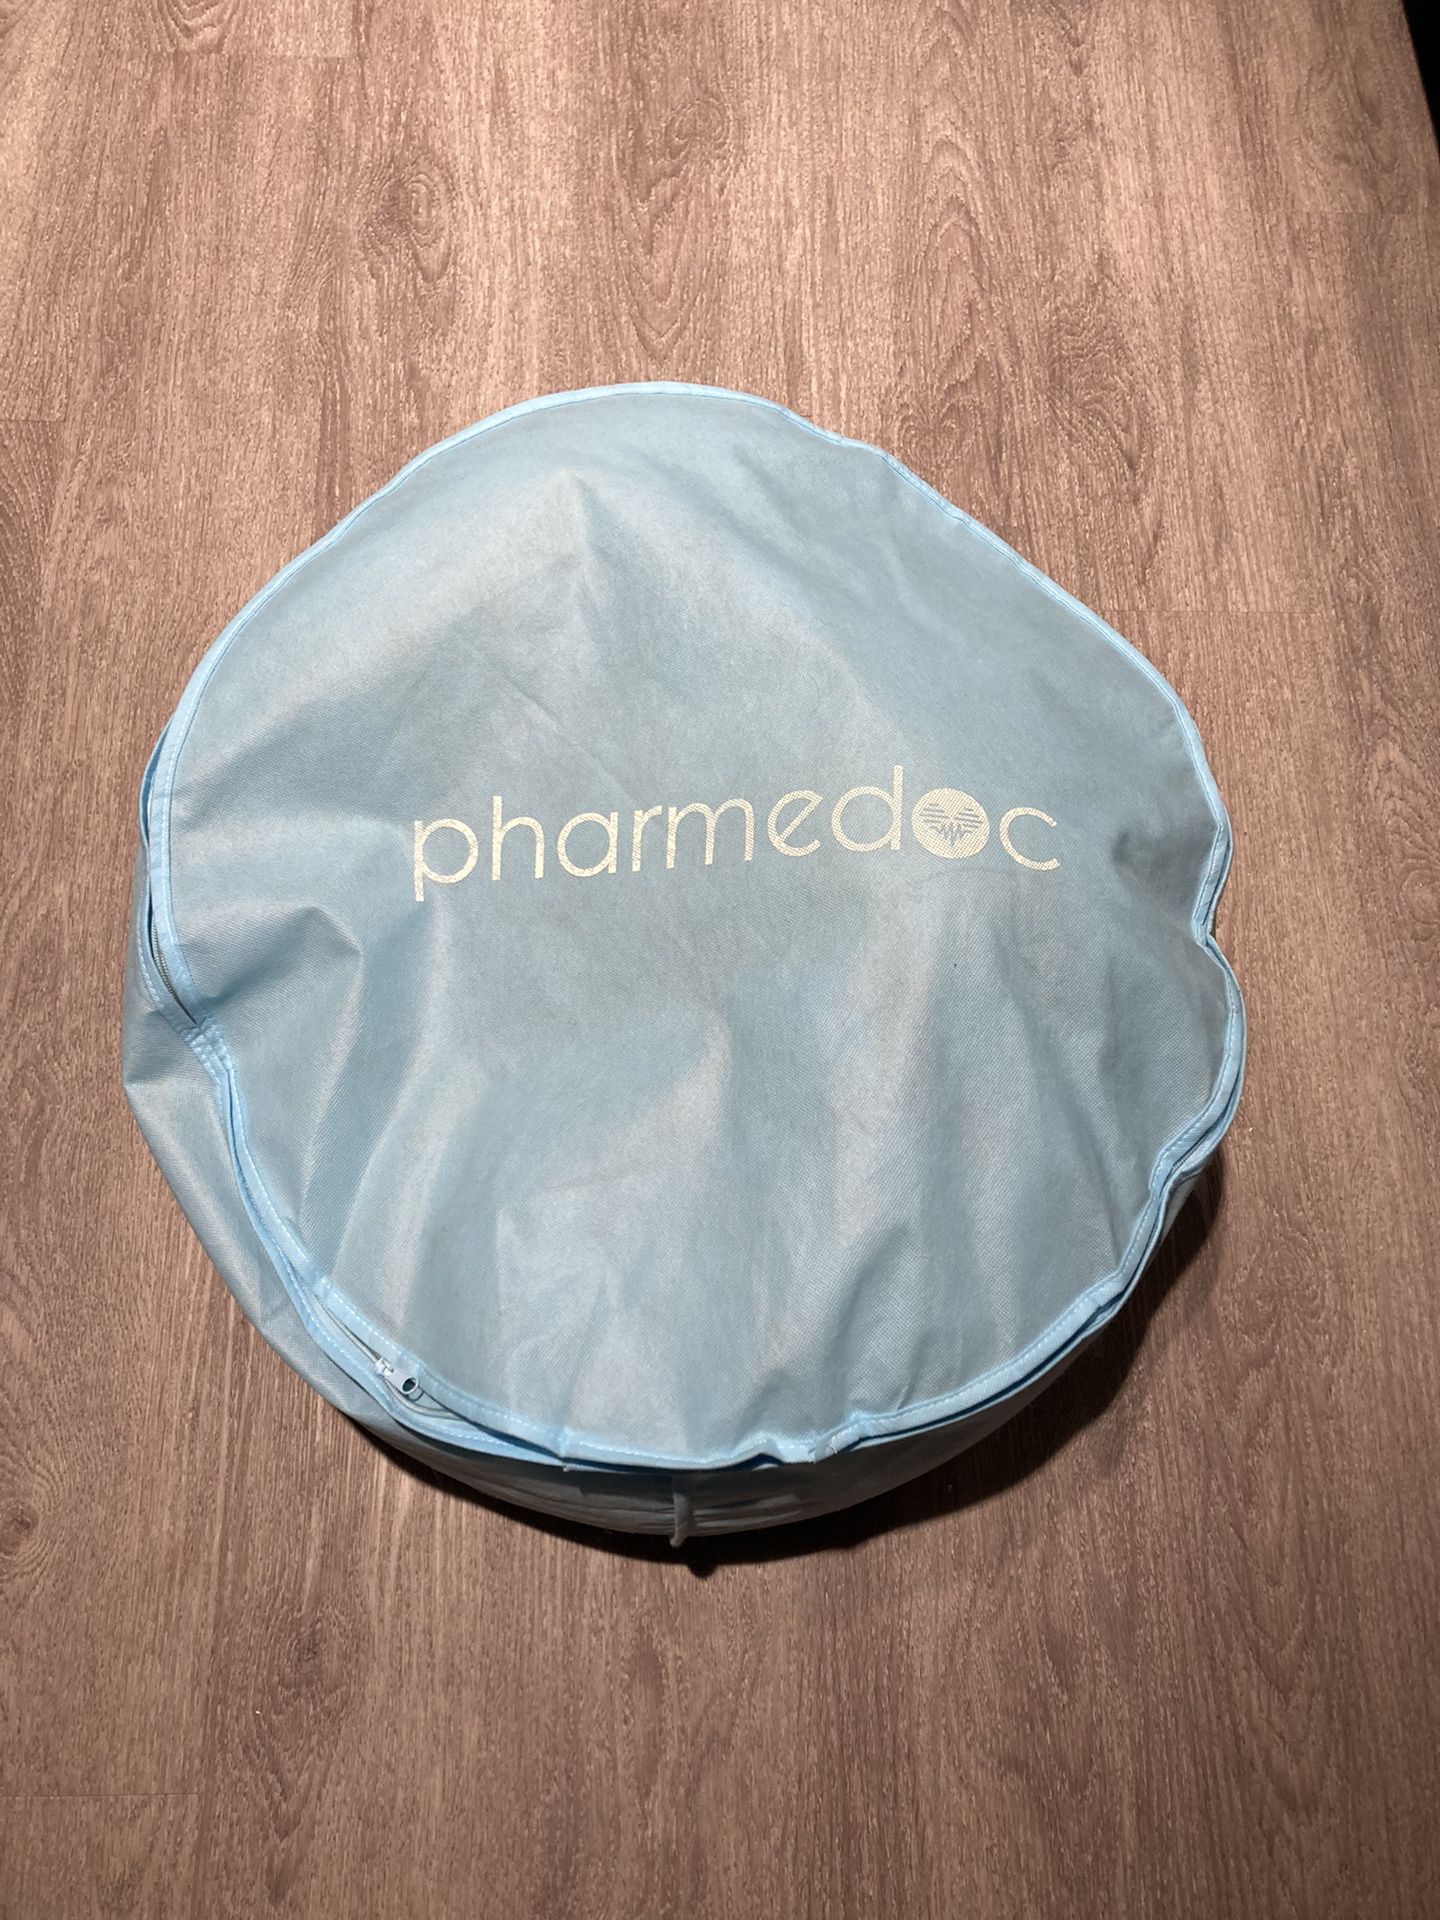 Pharmedoc pregnancy pillow